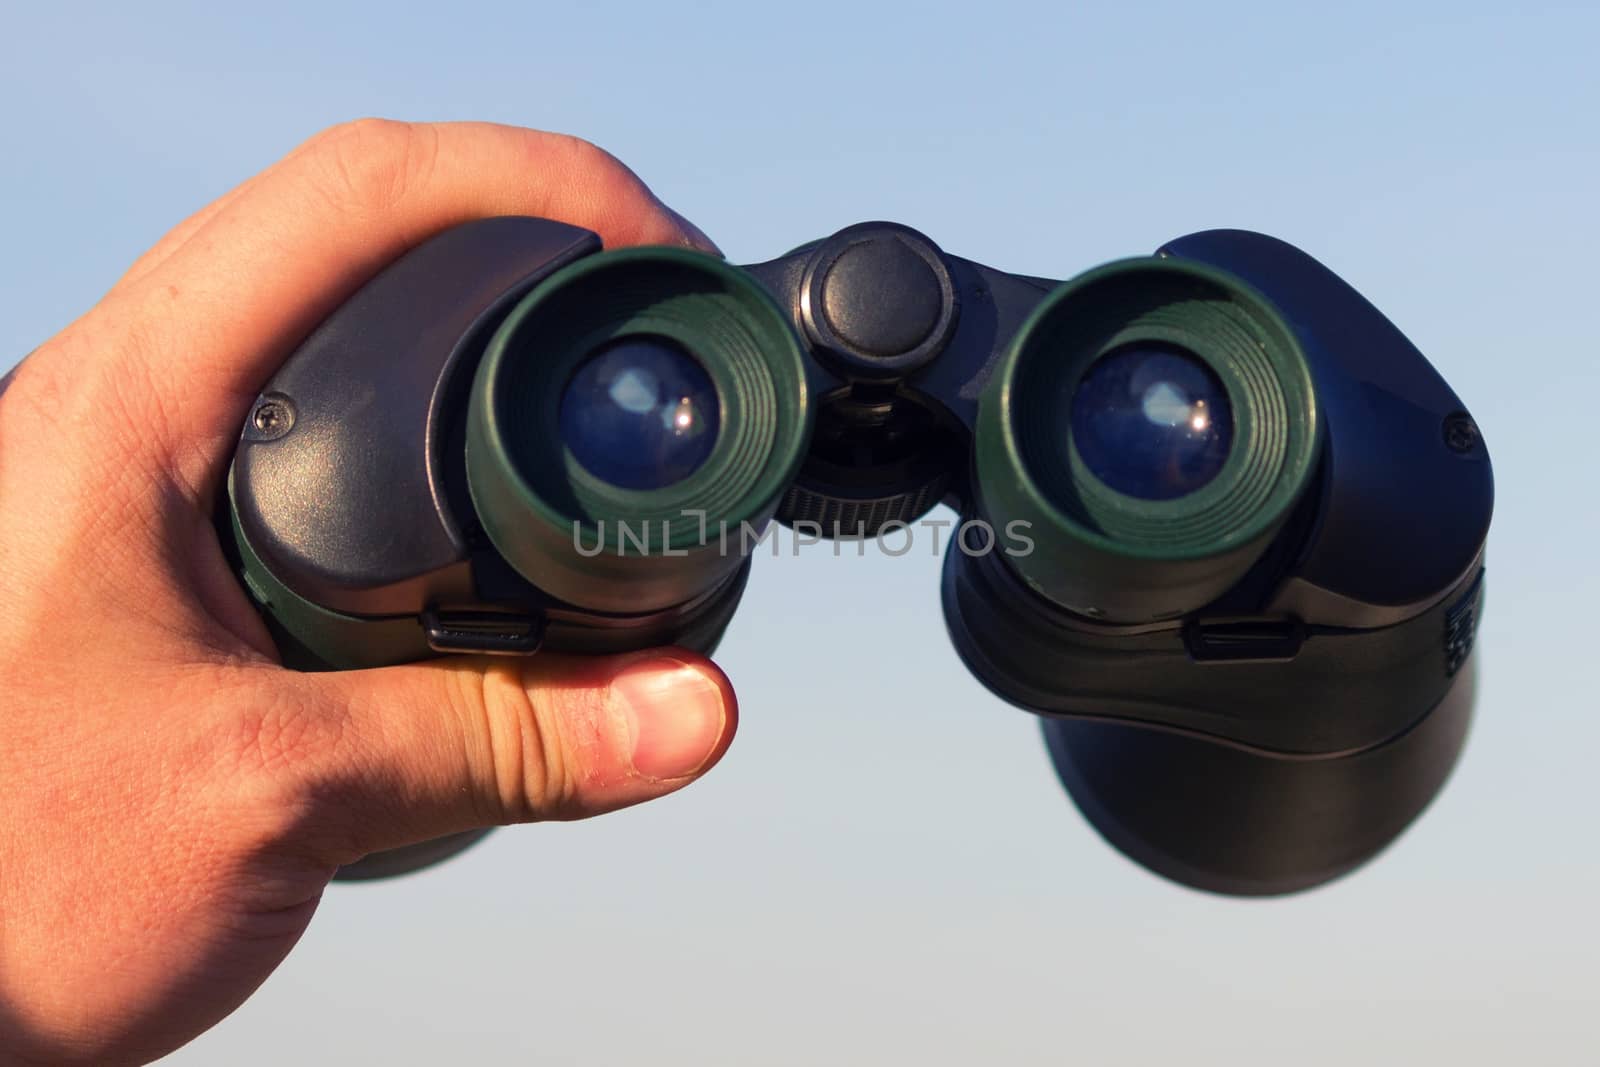 binocular in mans hands on the blue sky background